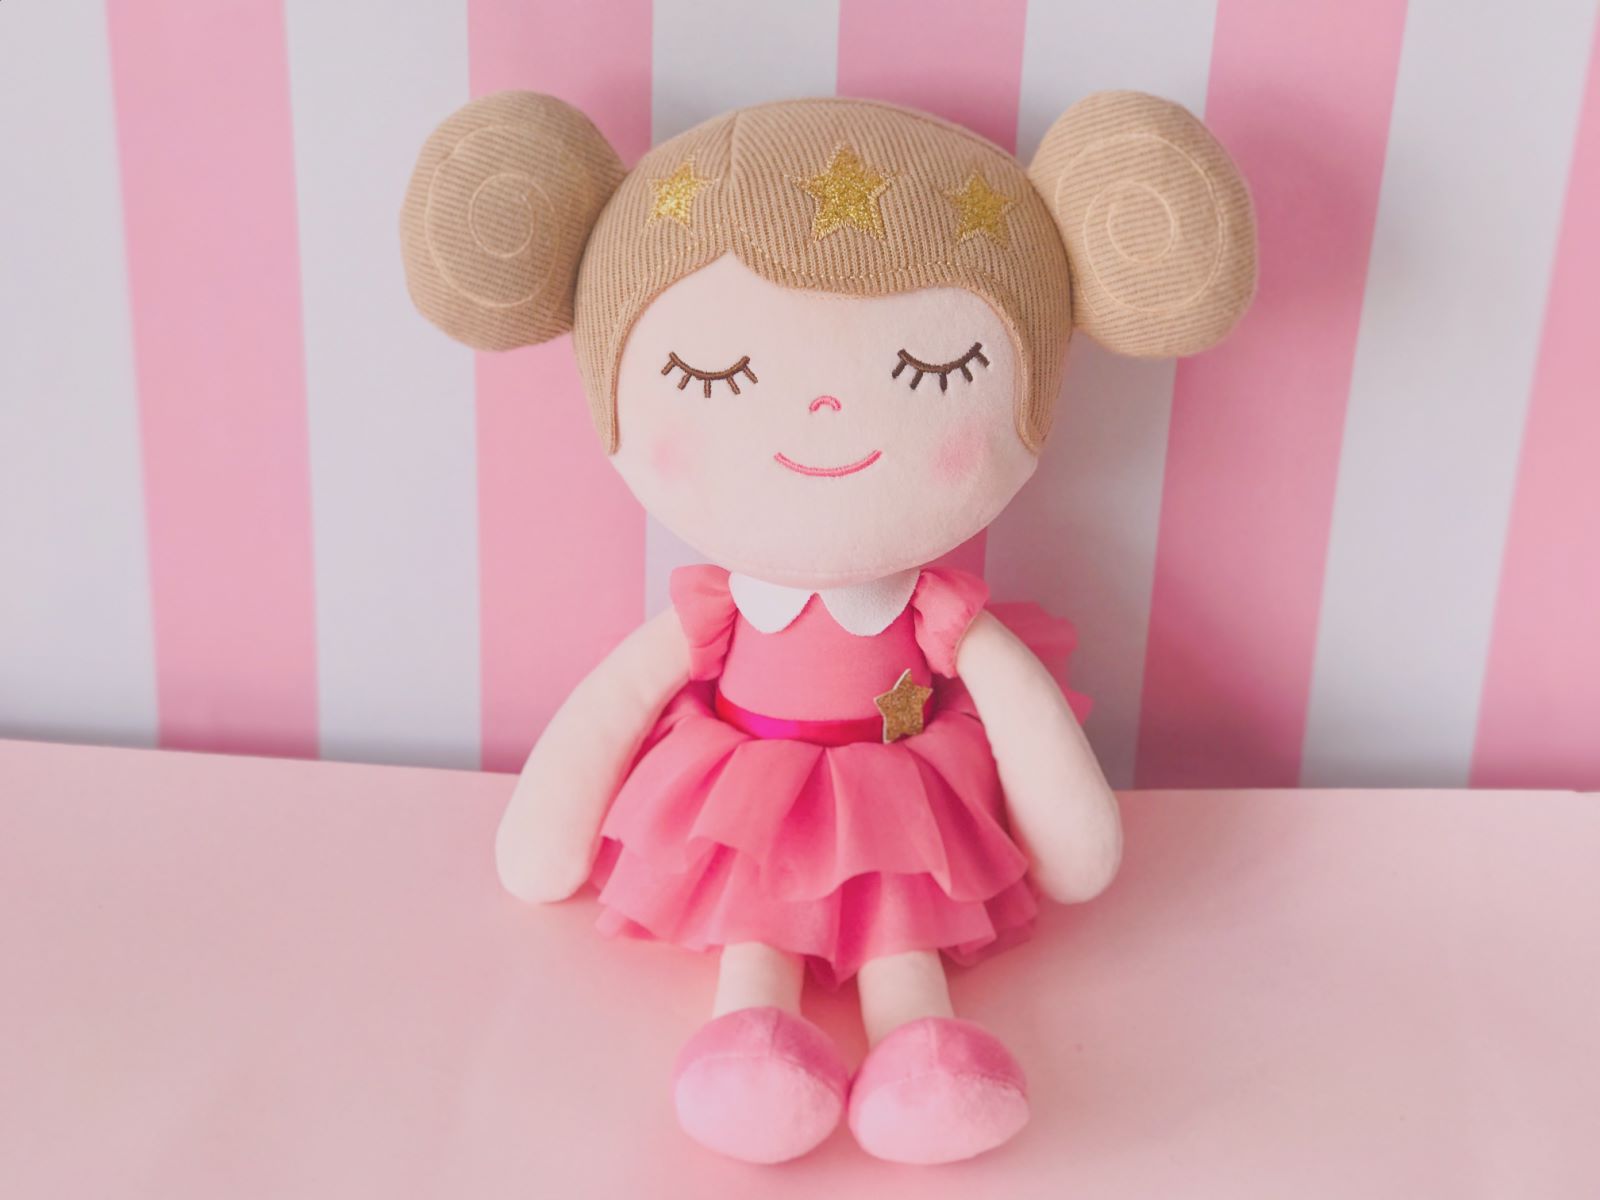 Gloveleya Soft Plush Dolls Dream Princess Lilac Princess Baby Girl Gifts Dream Girl Dolls Kids Plush Toy Birthday Gift for Girls